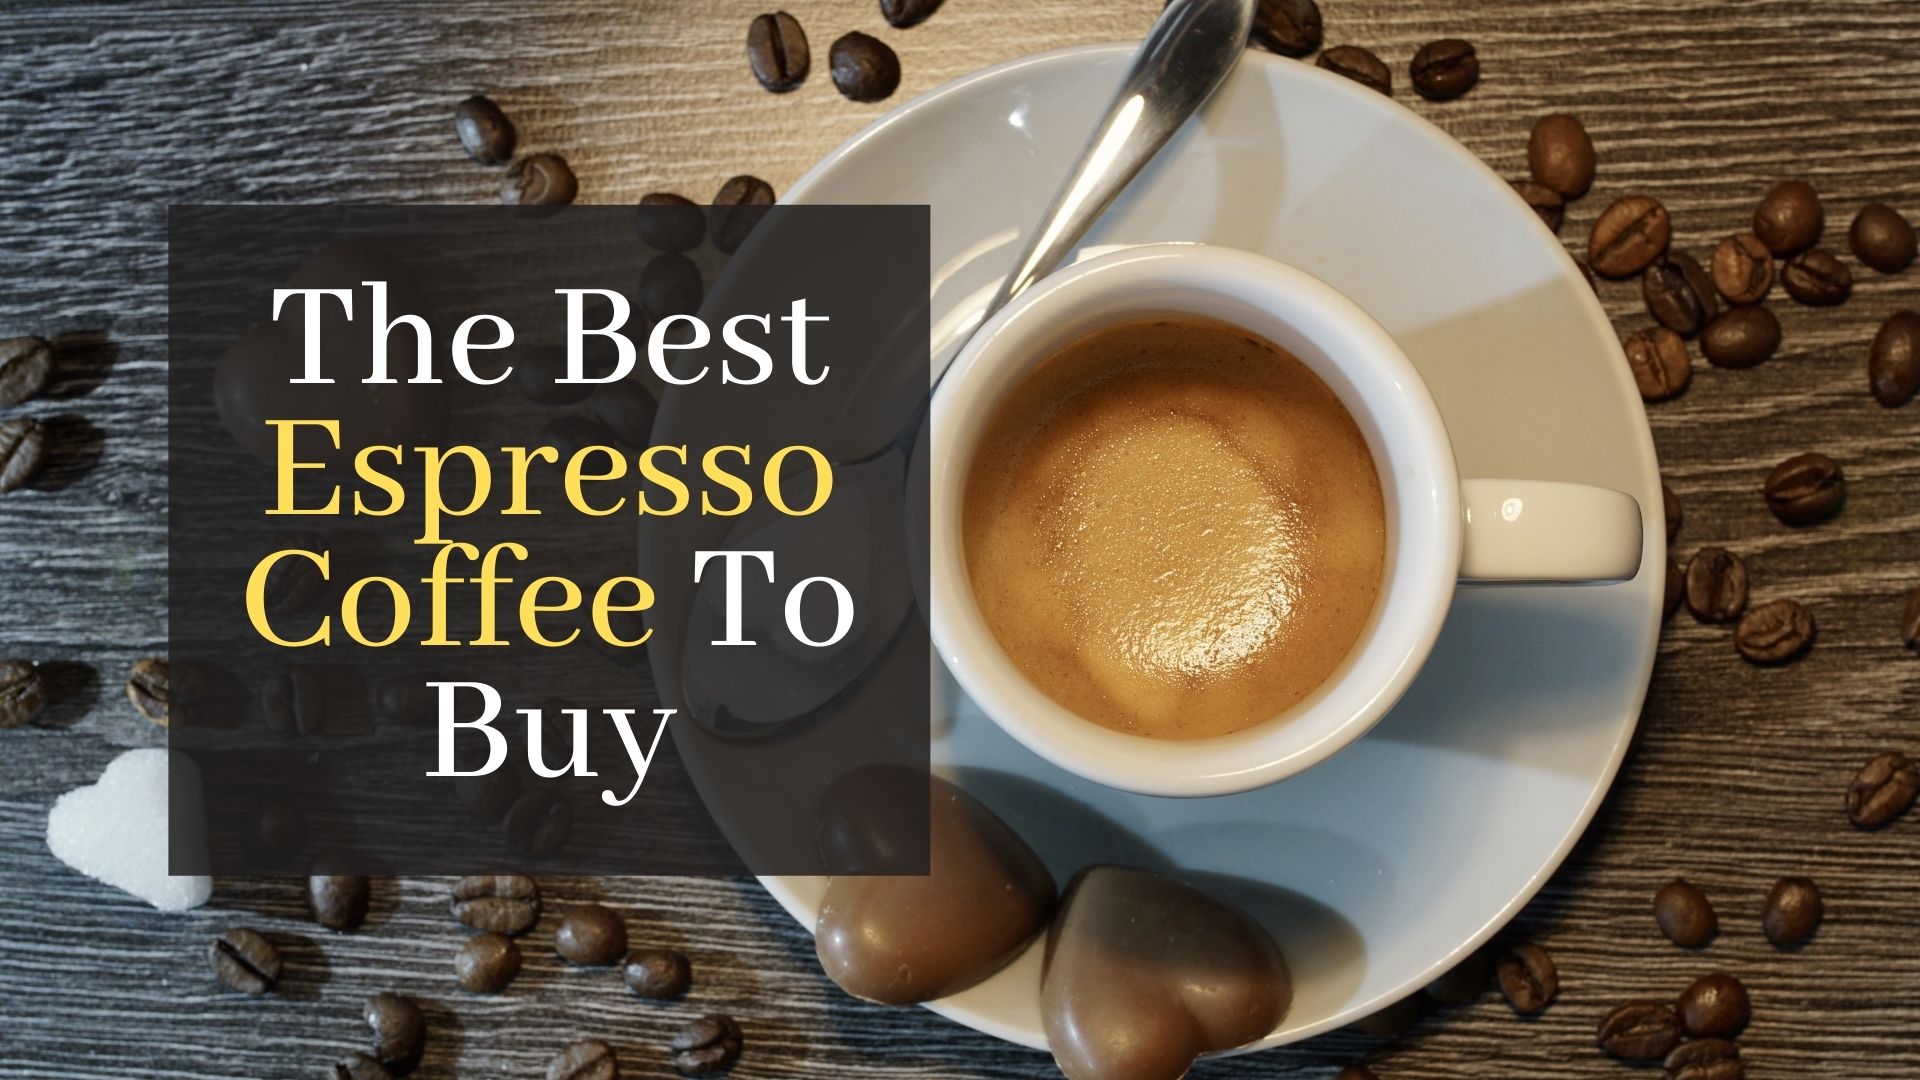 The Best Espresso Coffee To Buy